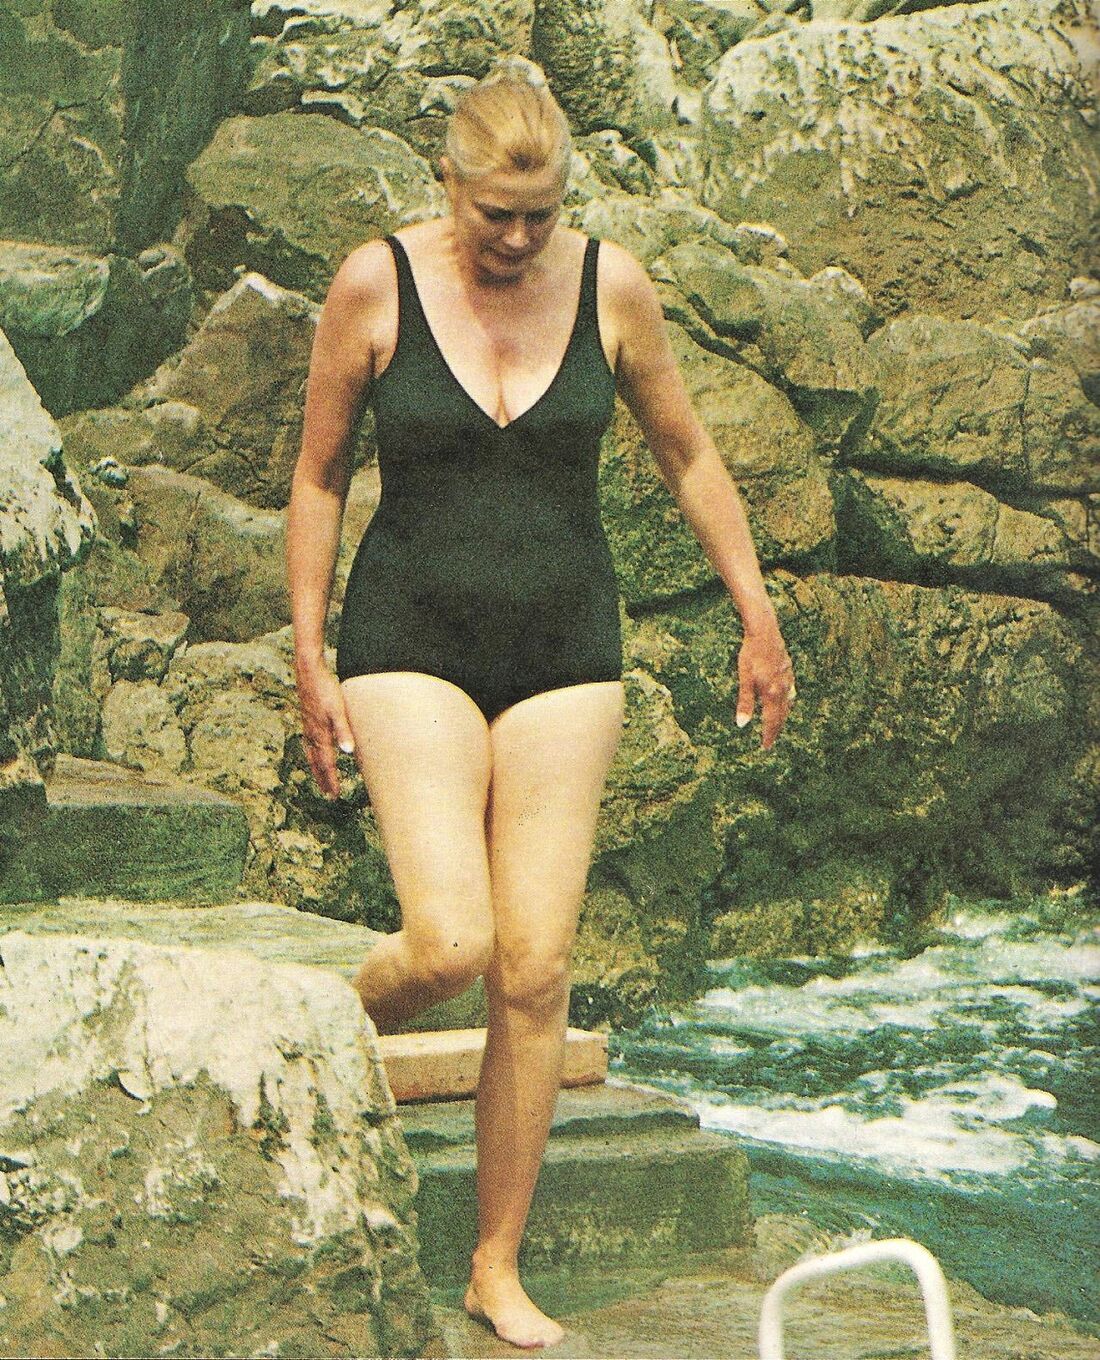 Elegant style icon wardrobe essentials: Grace Kelly in swimwear, a one piece black swimming suit